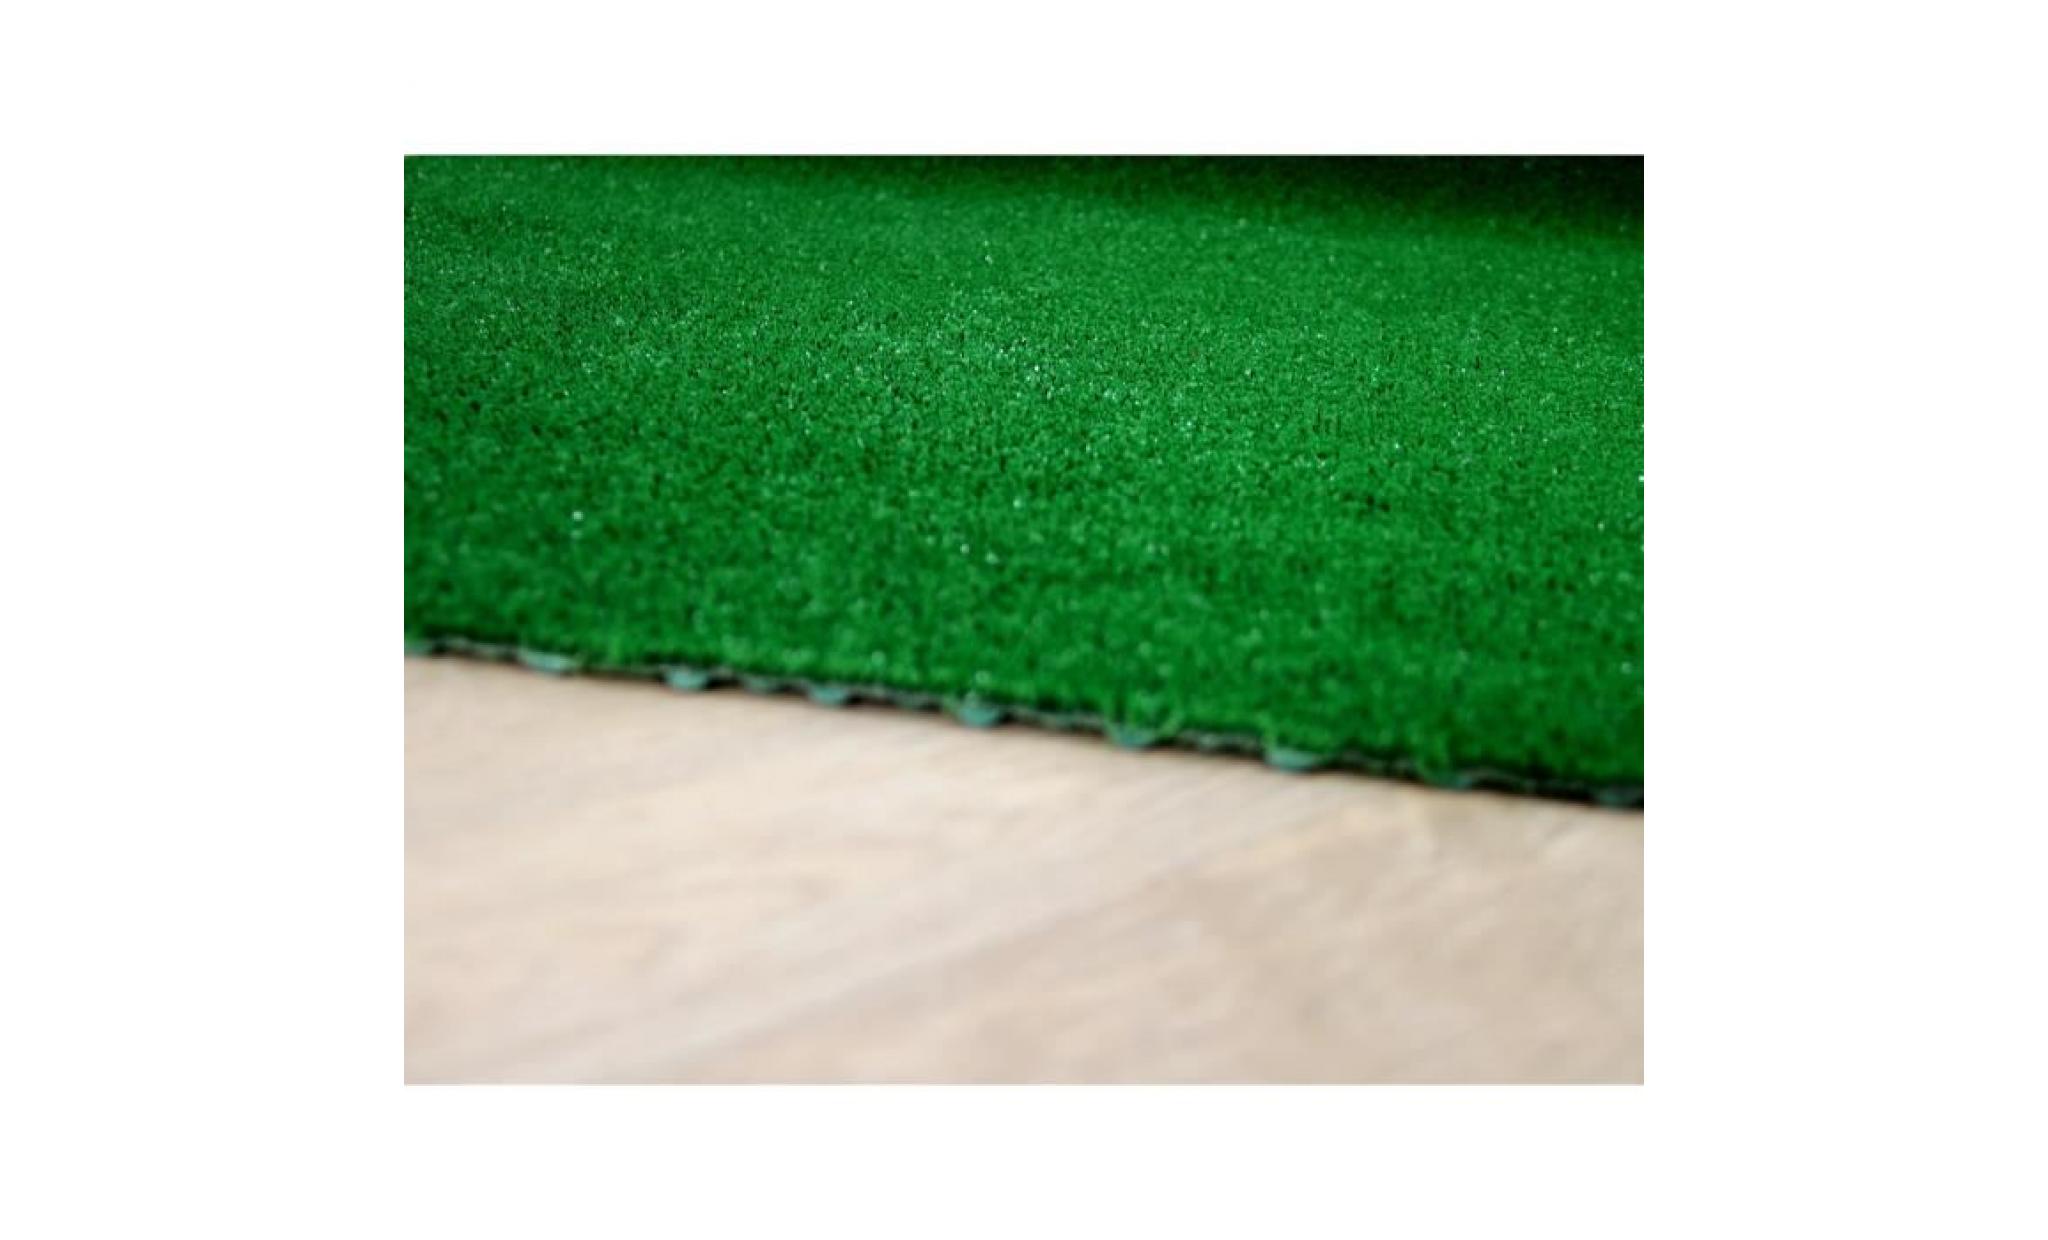 york   tapis type gazon artificiel avec nubs – pour jardin, terrasse, balcon   vert   [200x450 cm] pas cher